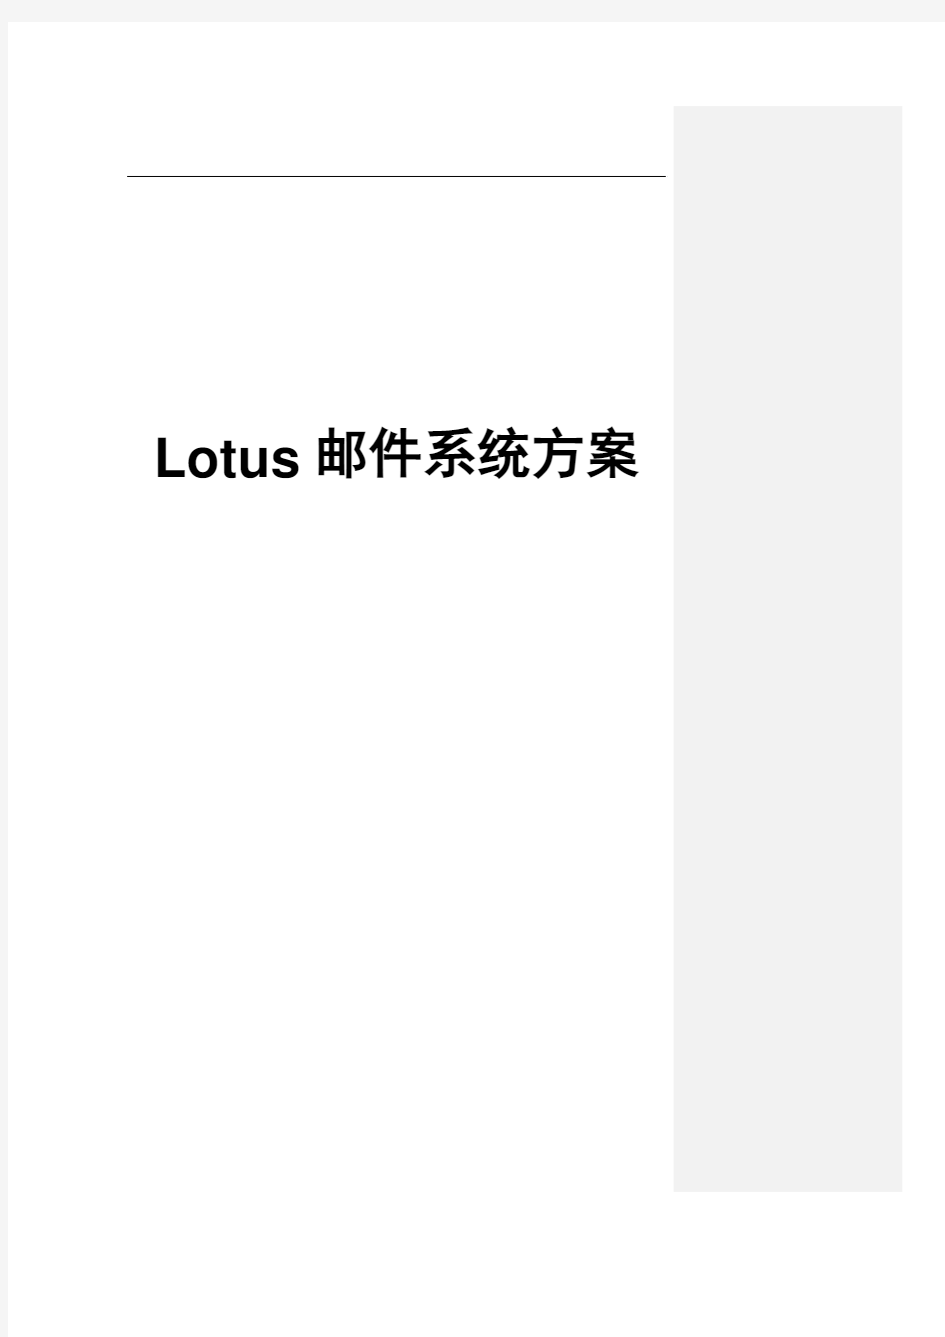 Lotus邮件系统解决方案